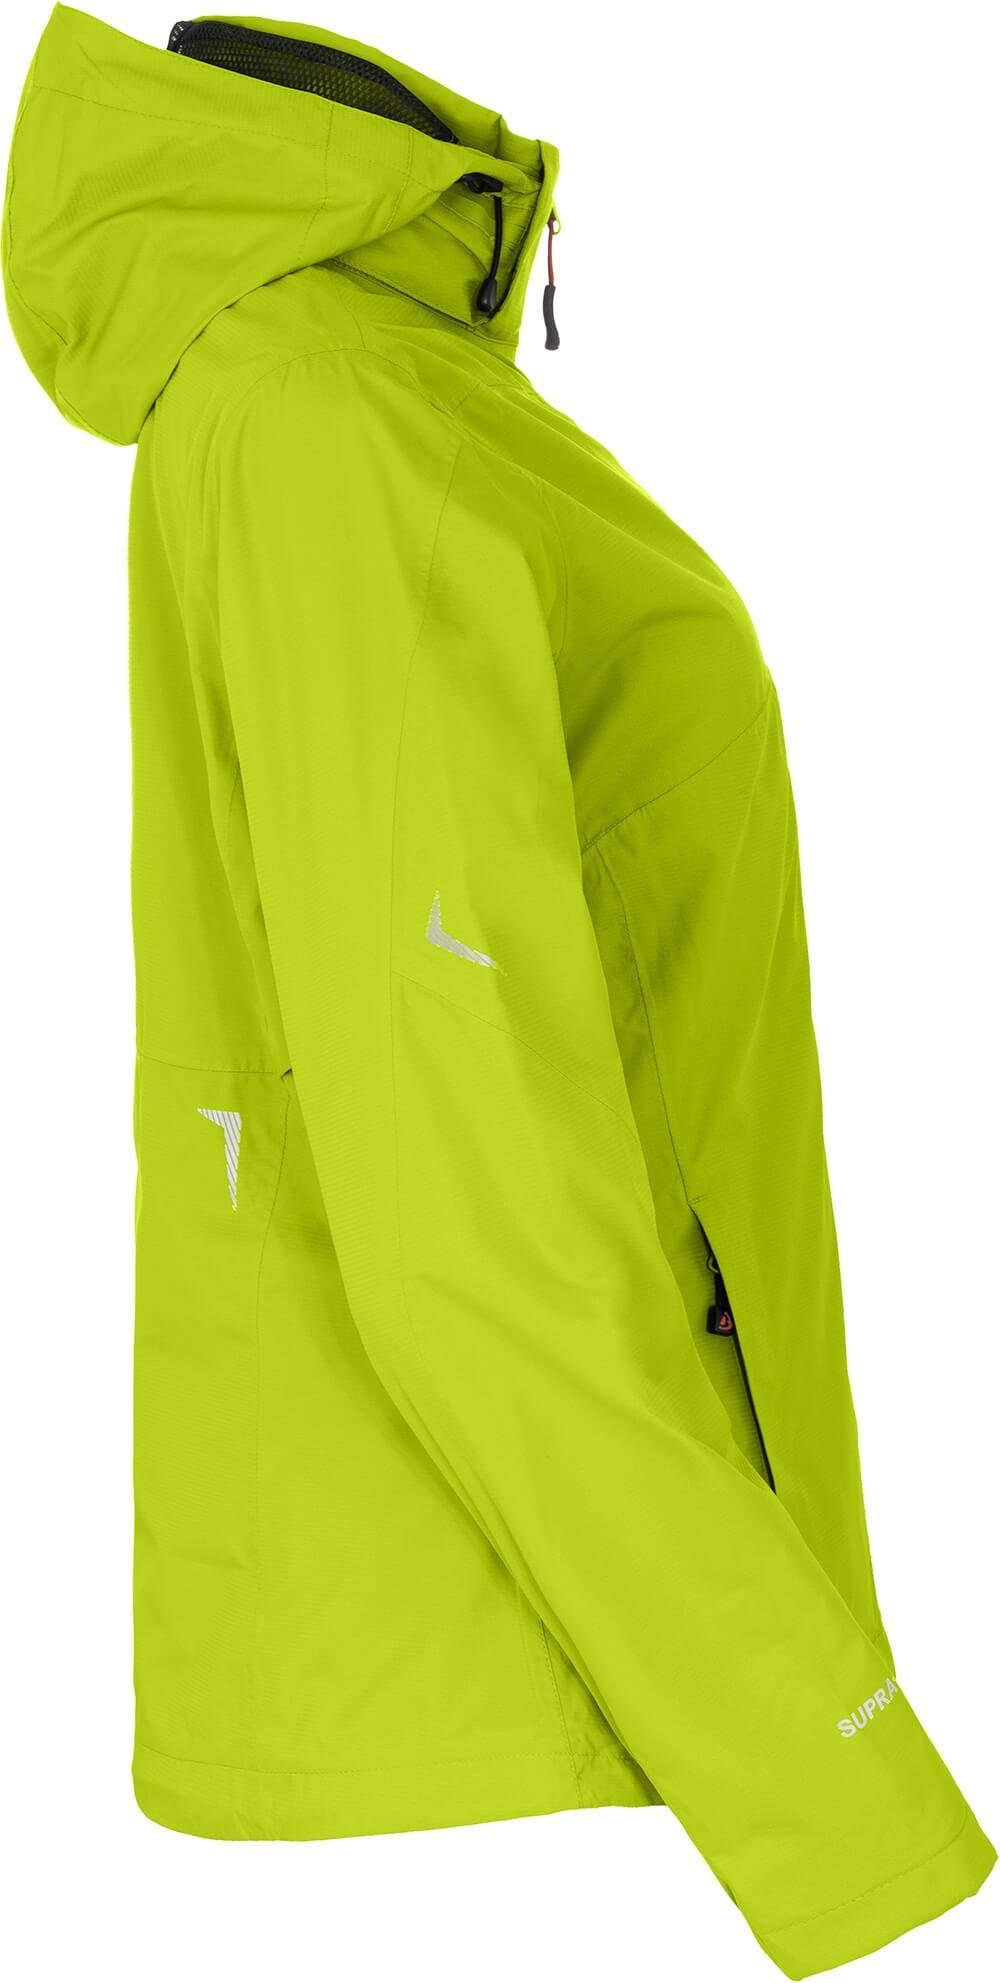 grün Bergson VALDIVIA Rad-Regenjacke, mm 12000 Outdoorjacke leuchtend Netzfutter, Wassersäule, Normalgrößen, Damen